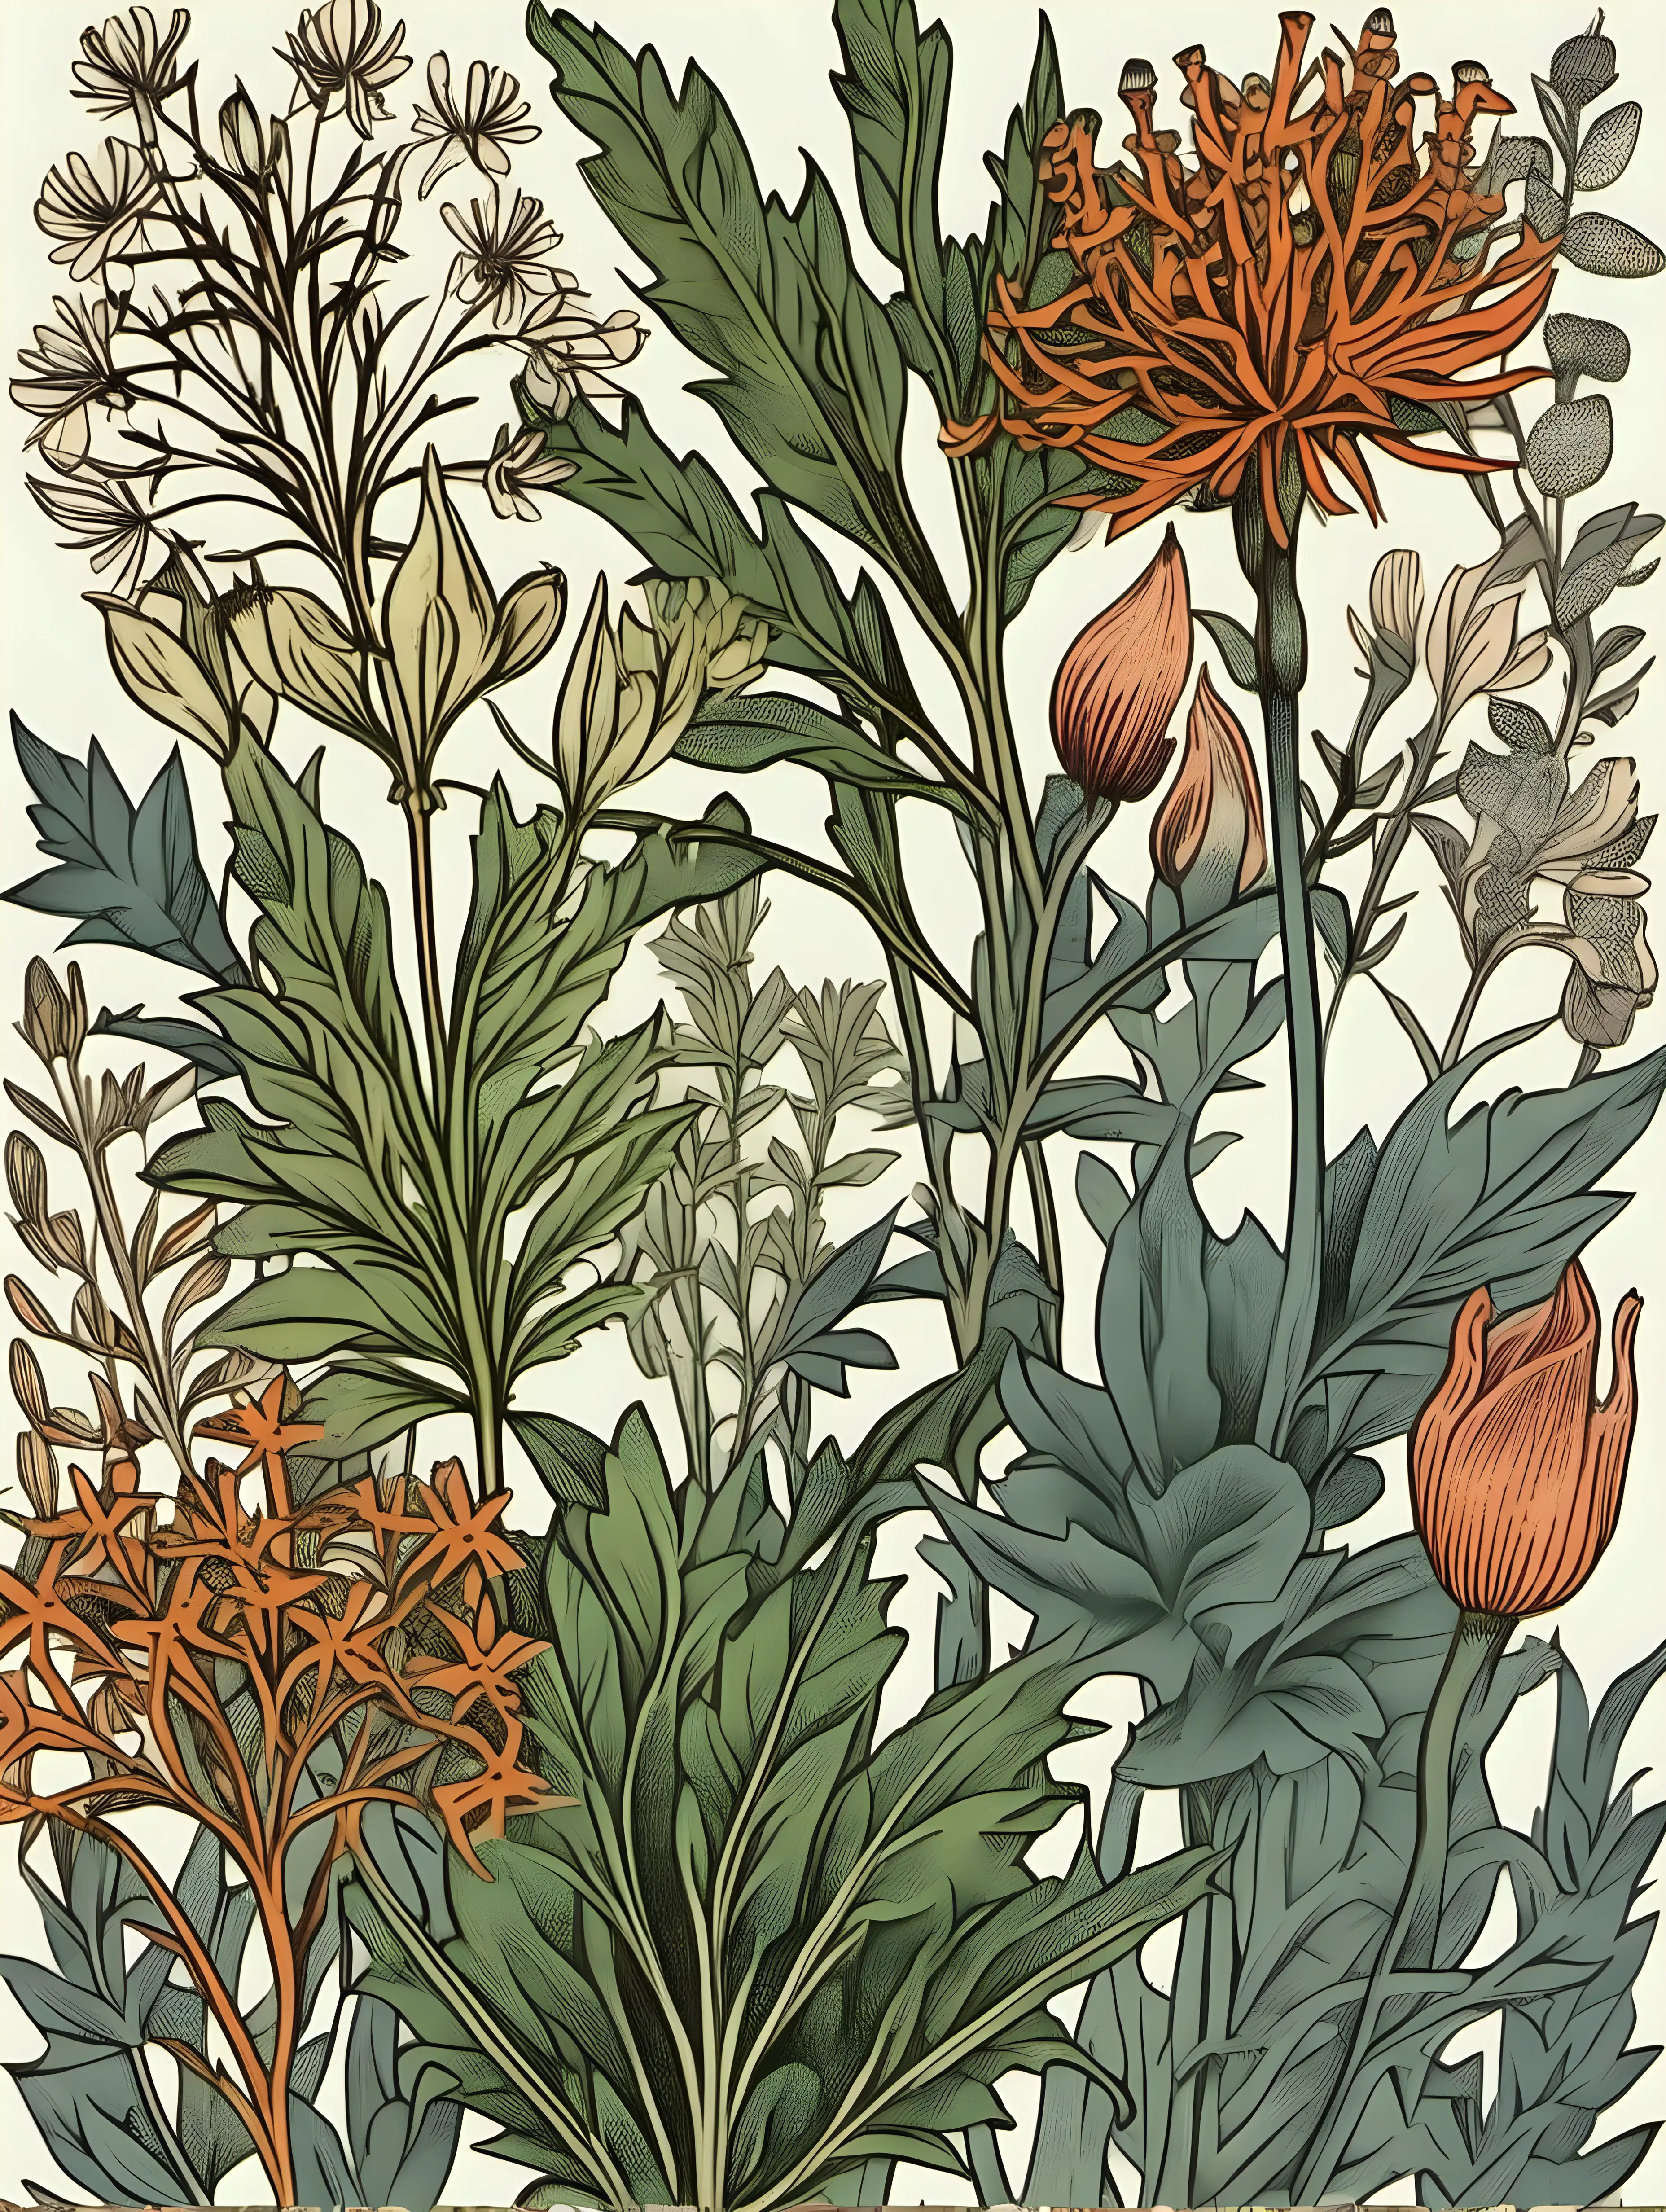 Vintage Botanical Illustration Herbs and Plants Postcard in William Morris Style